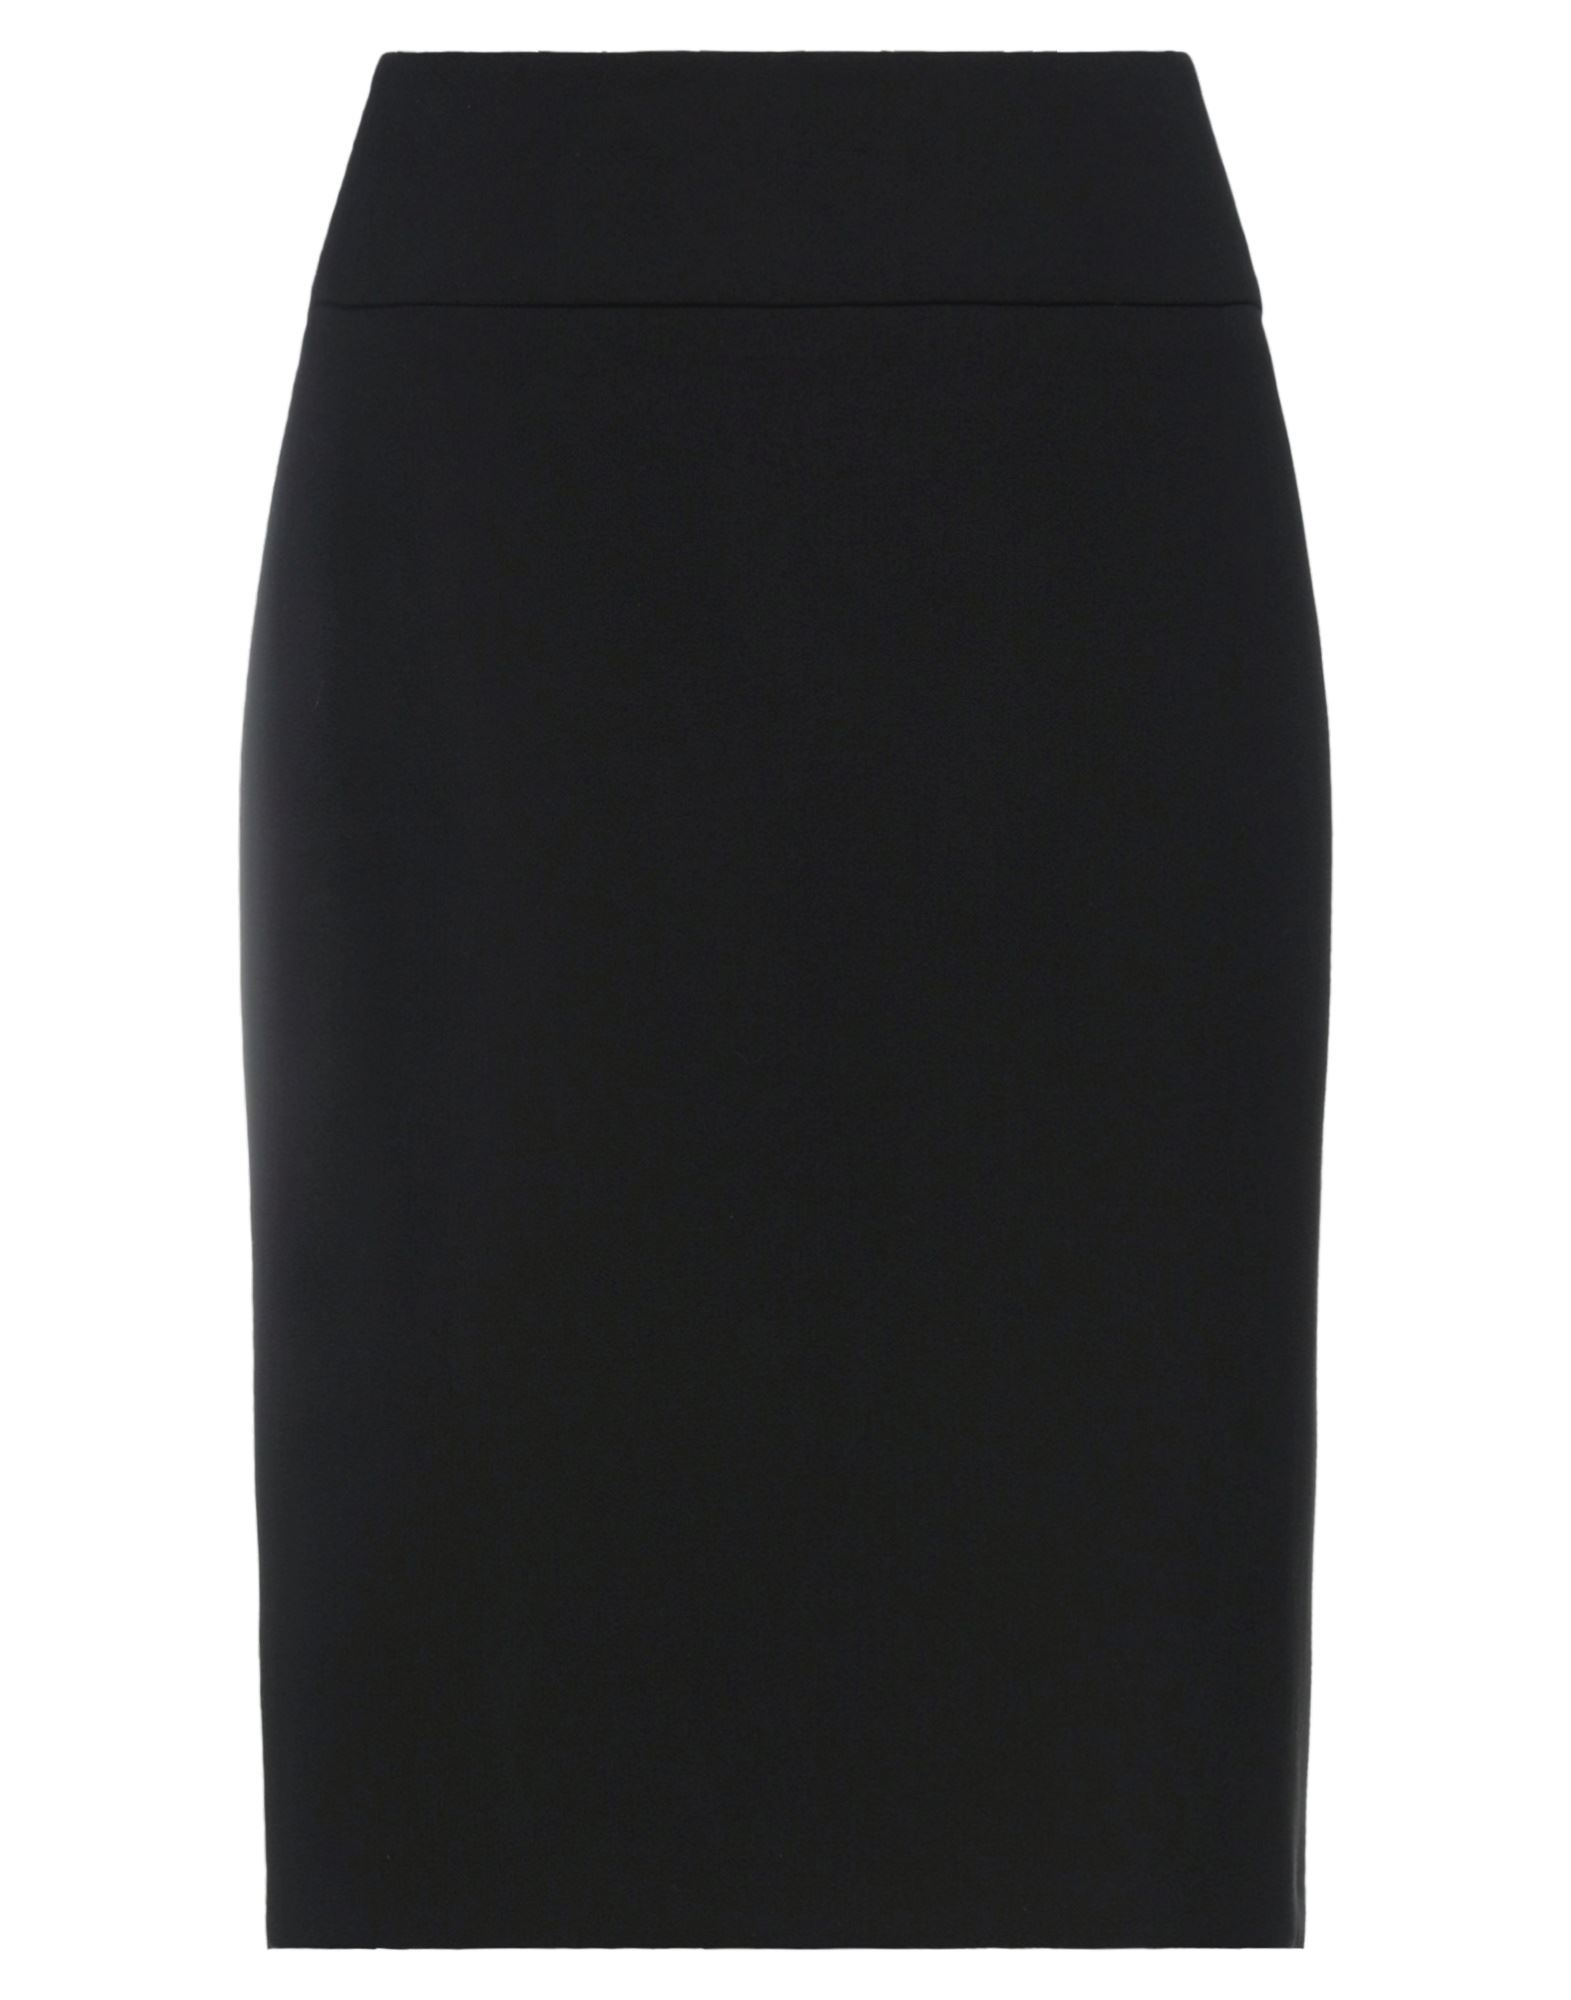 Accuà By Psr Midi Skirts In Black